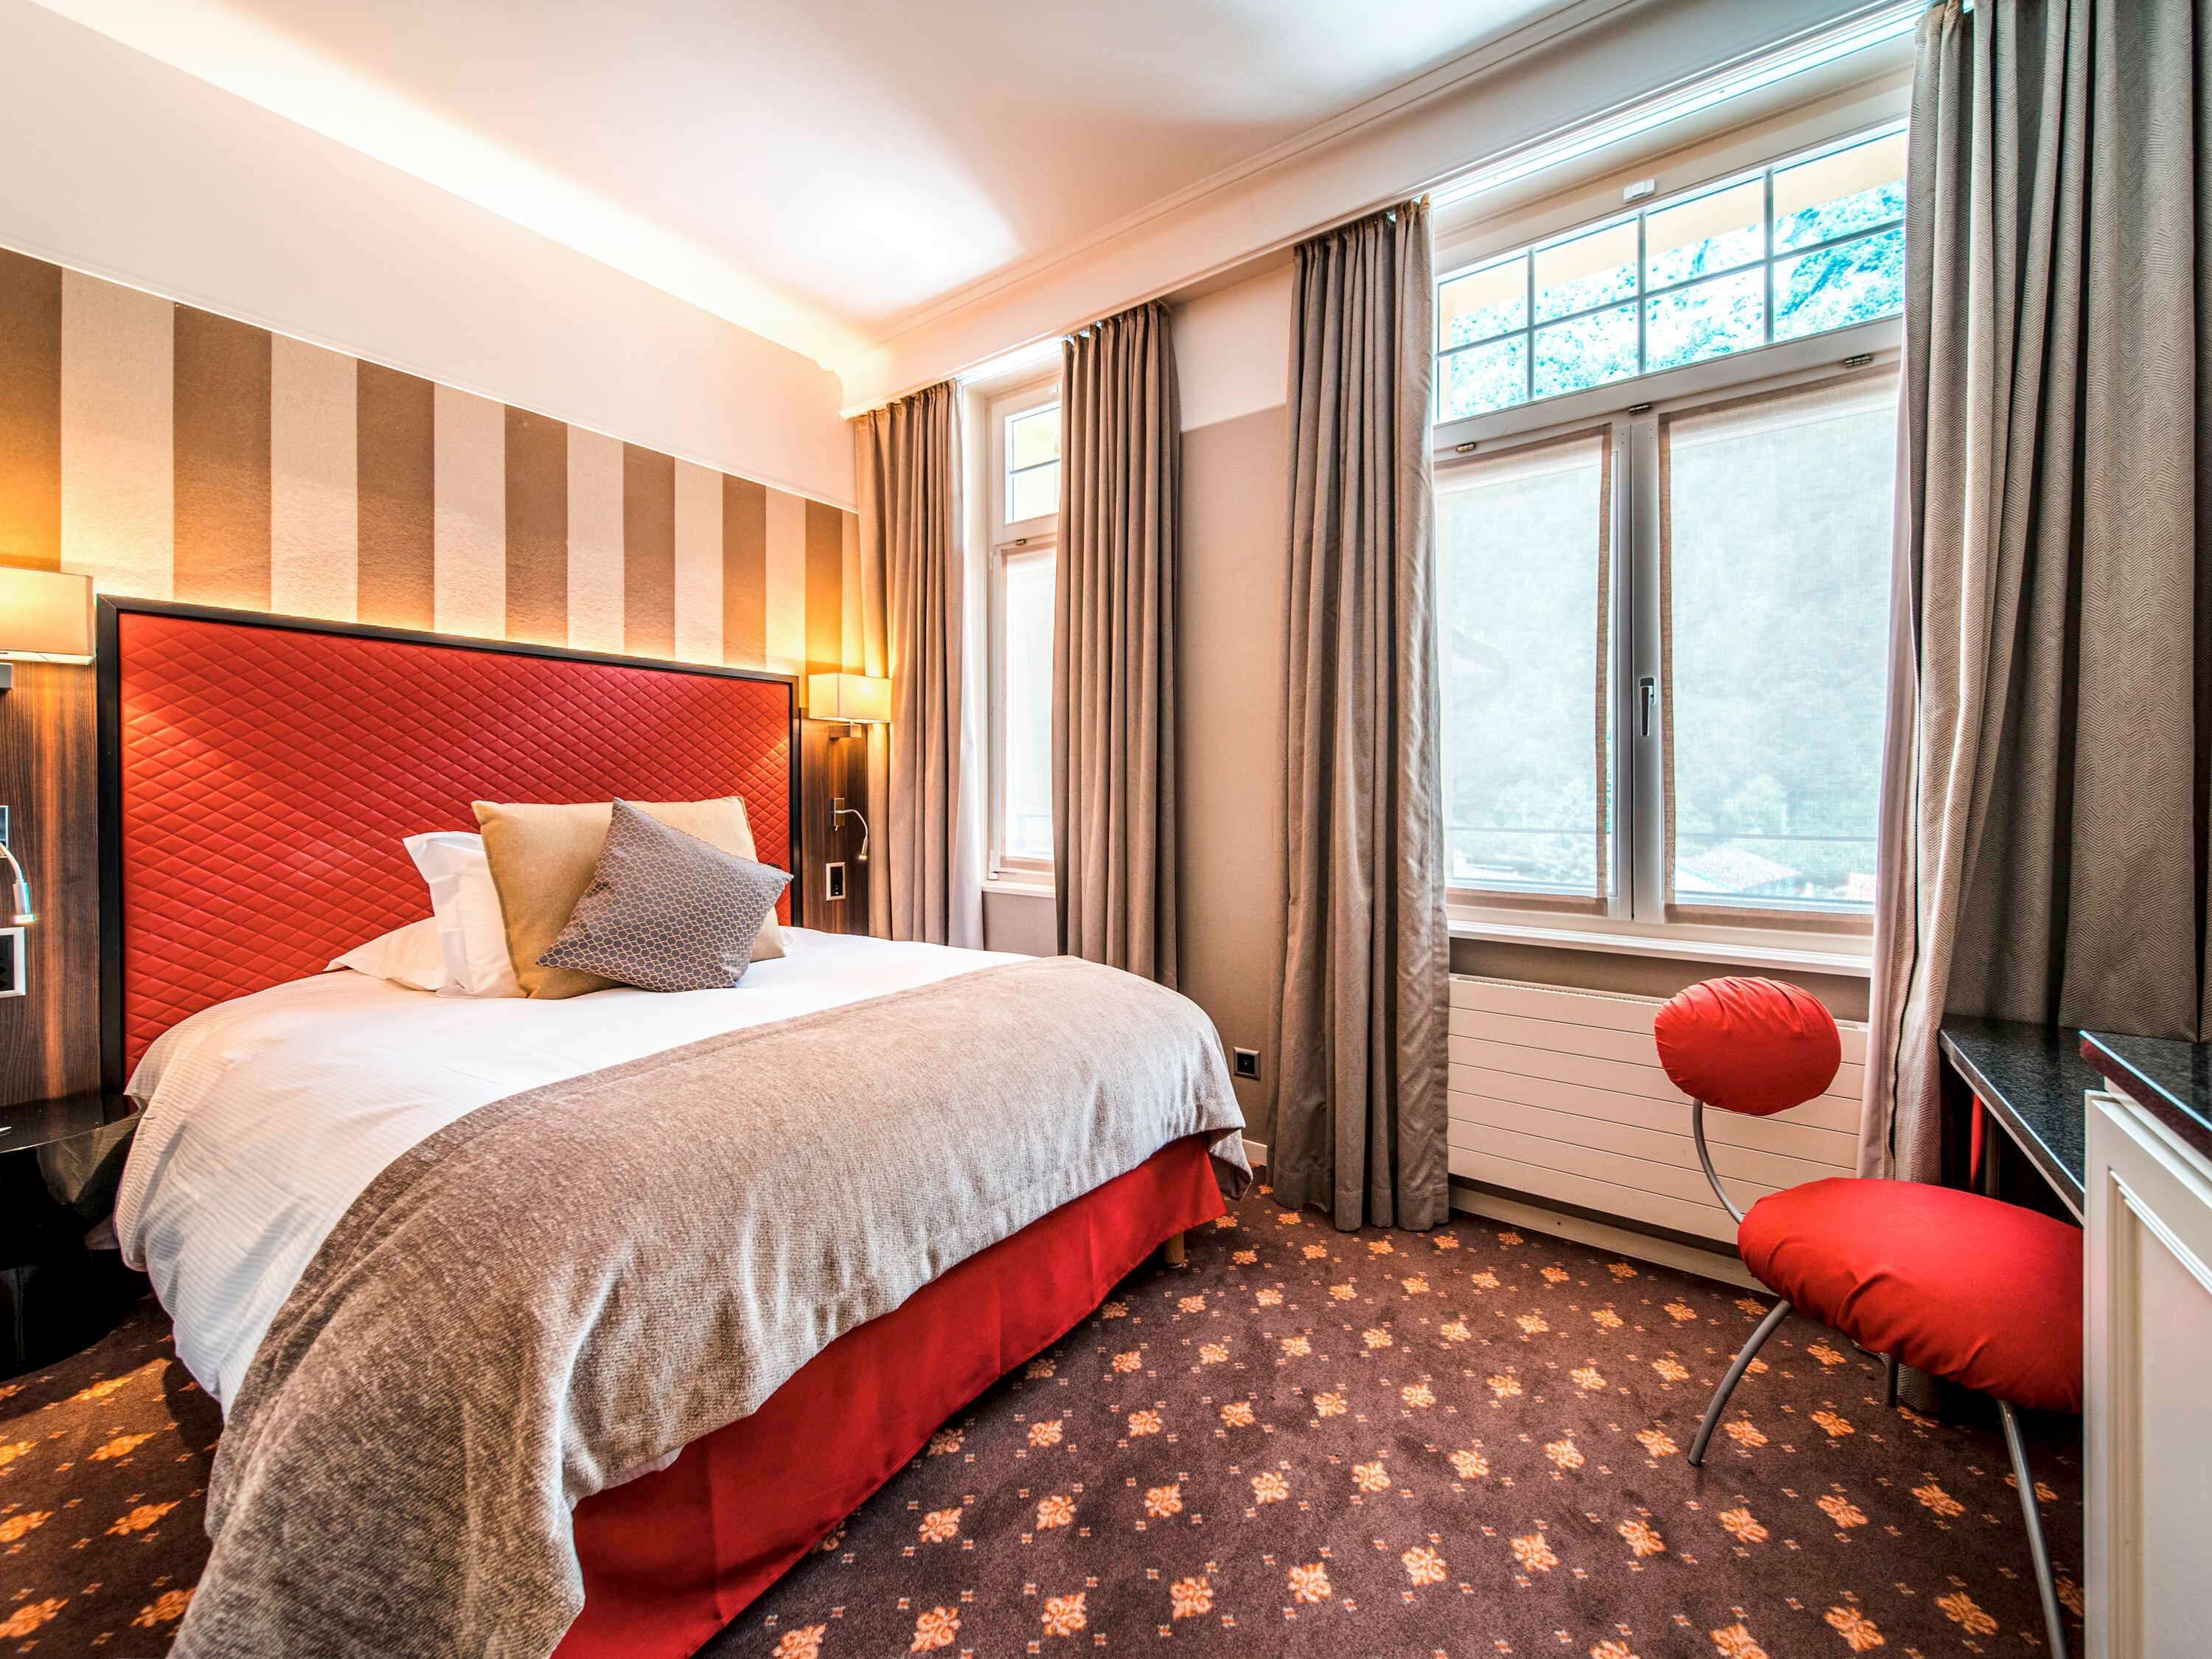 Hotel Royal St Georges Interlaken - MGallery